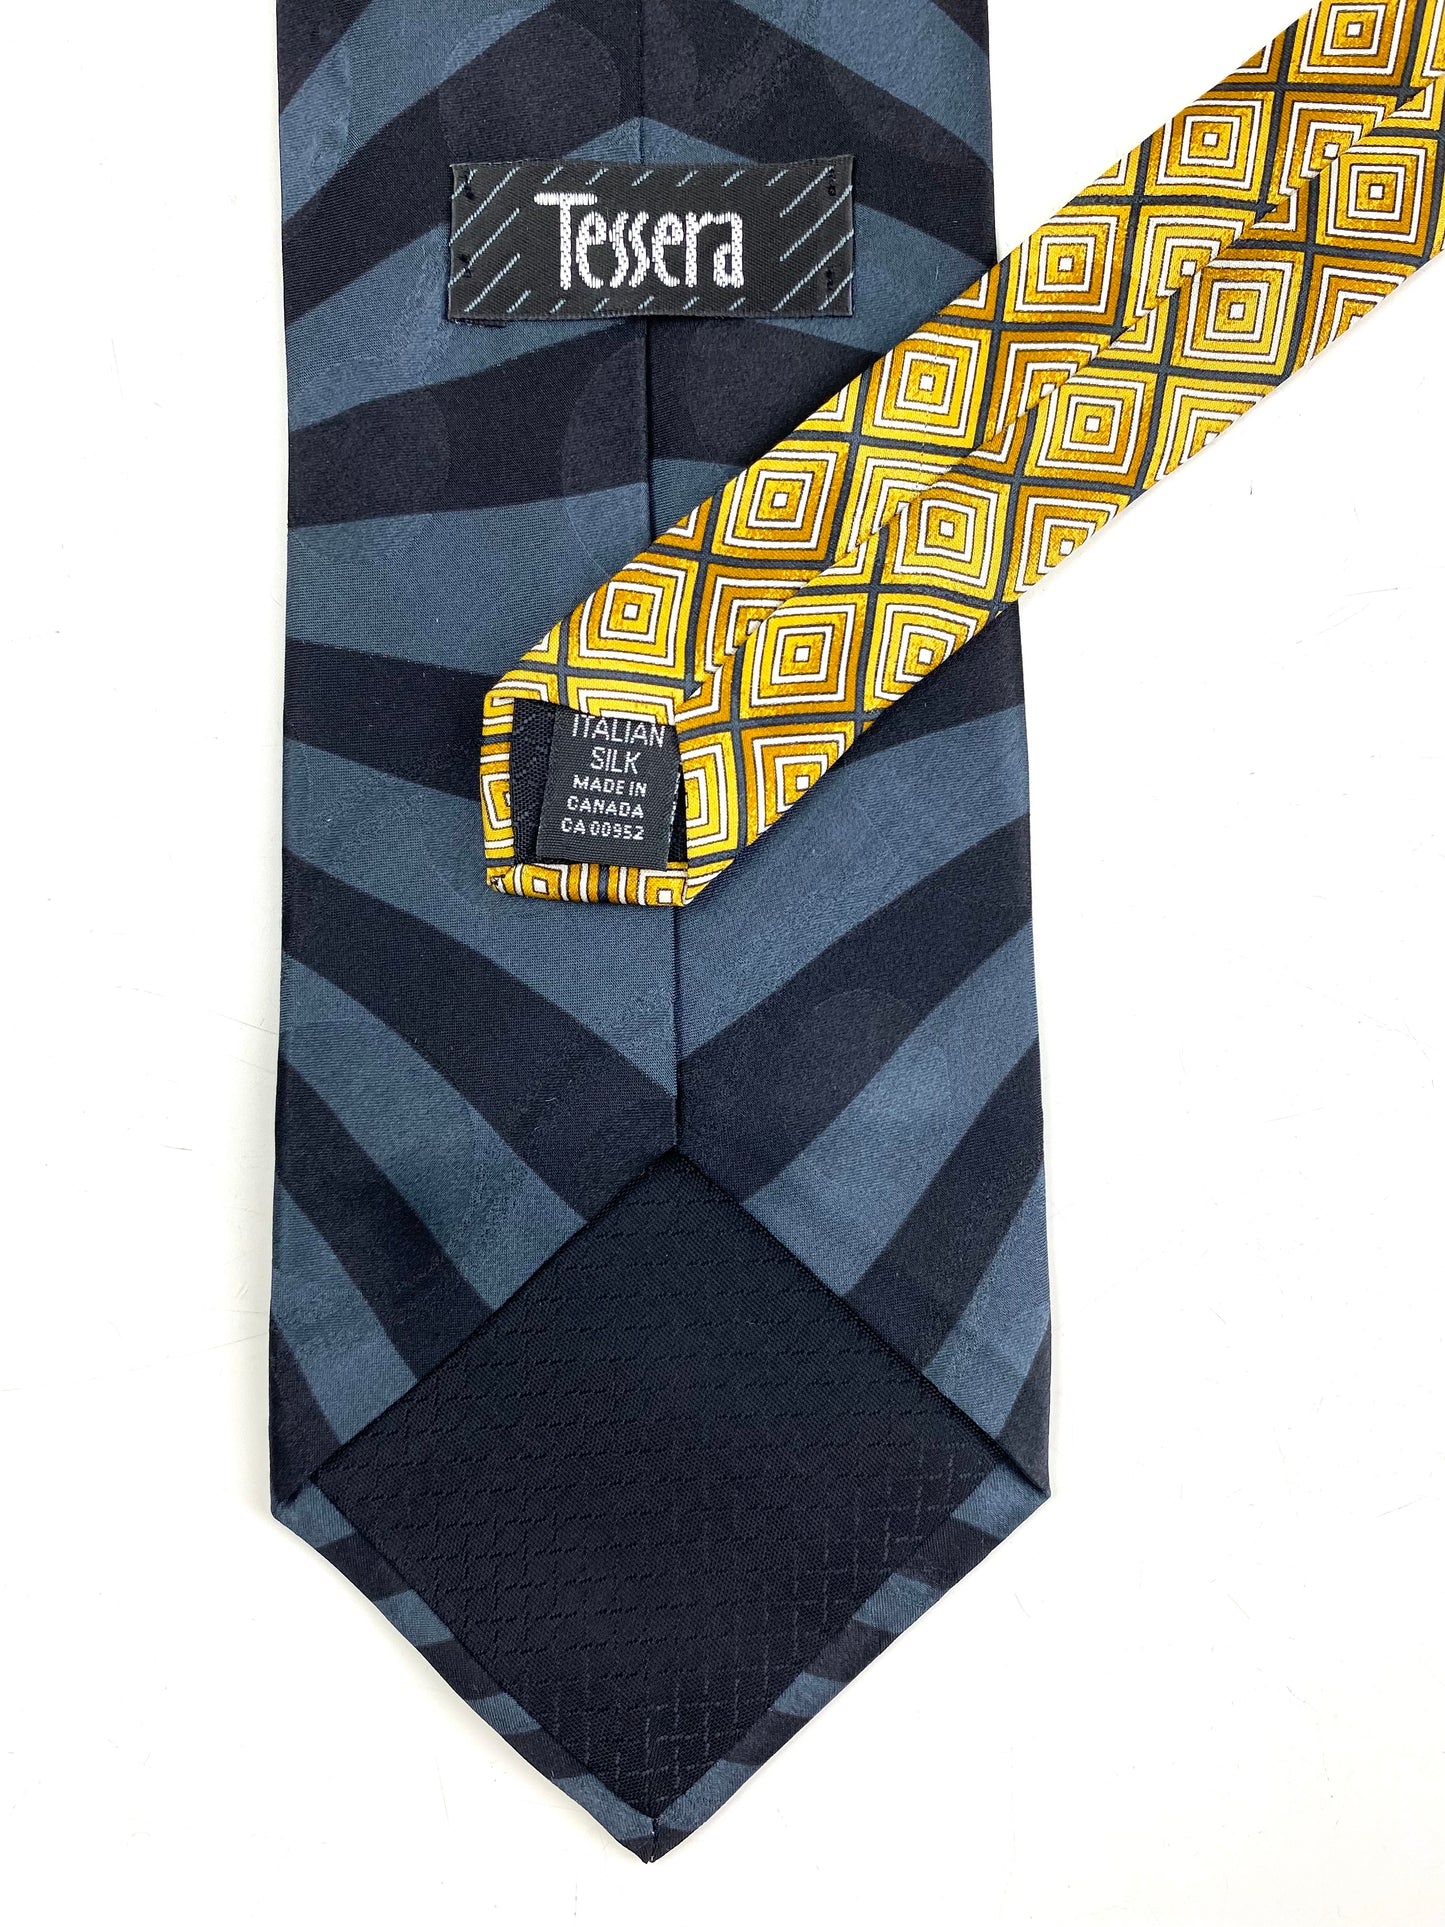 Back and labels of: 90s Deadstock Necktie, Men's Vintage Black/White/Gold Art Deco Print Tie, NOS